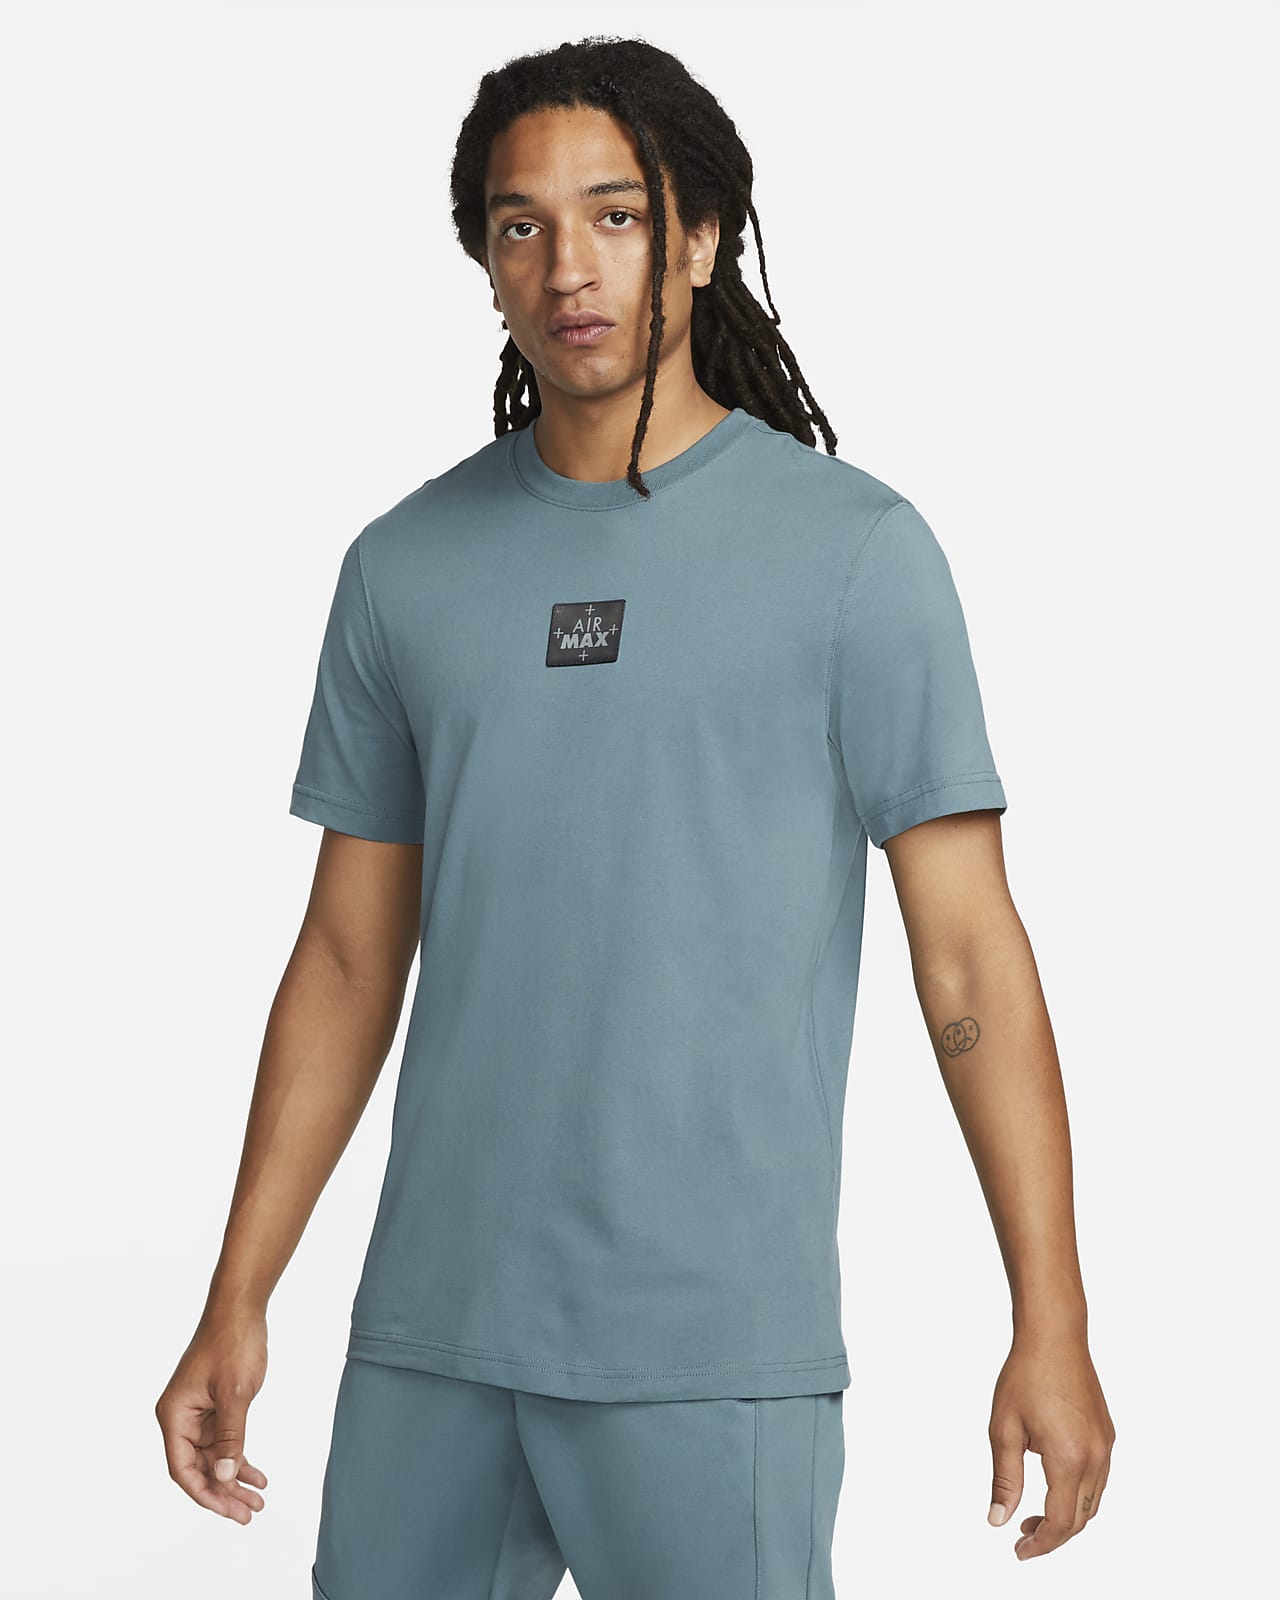 Girar en descubierto arco Antagonismo Nike Sportswear Air Max Camiseta - Hombre. Nike ES